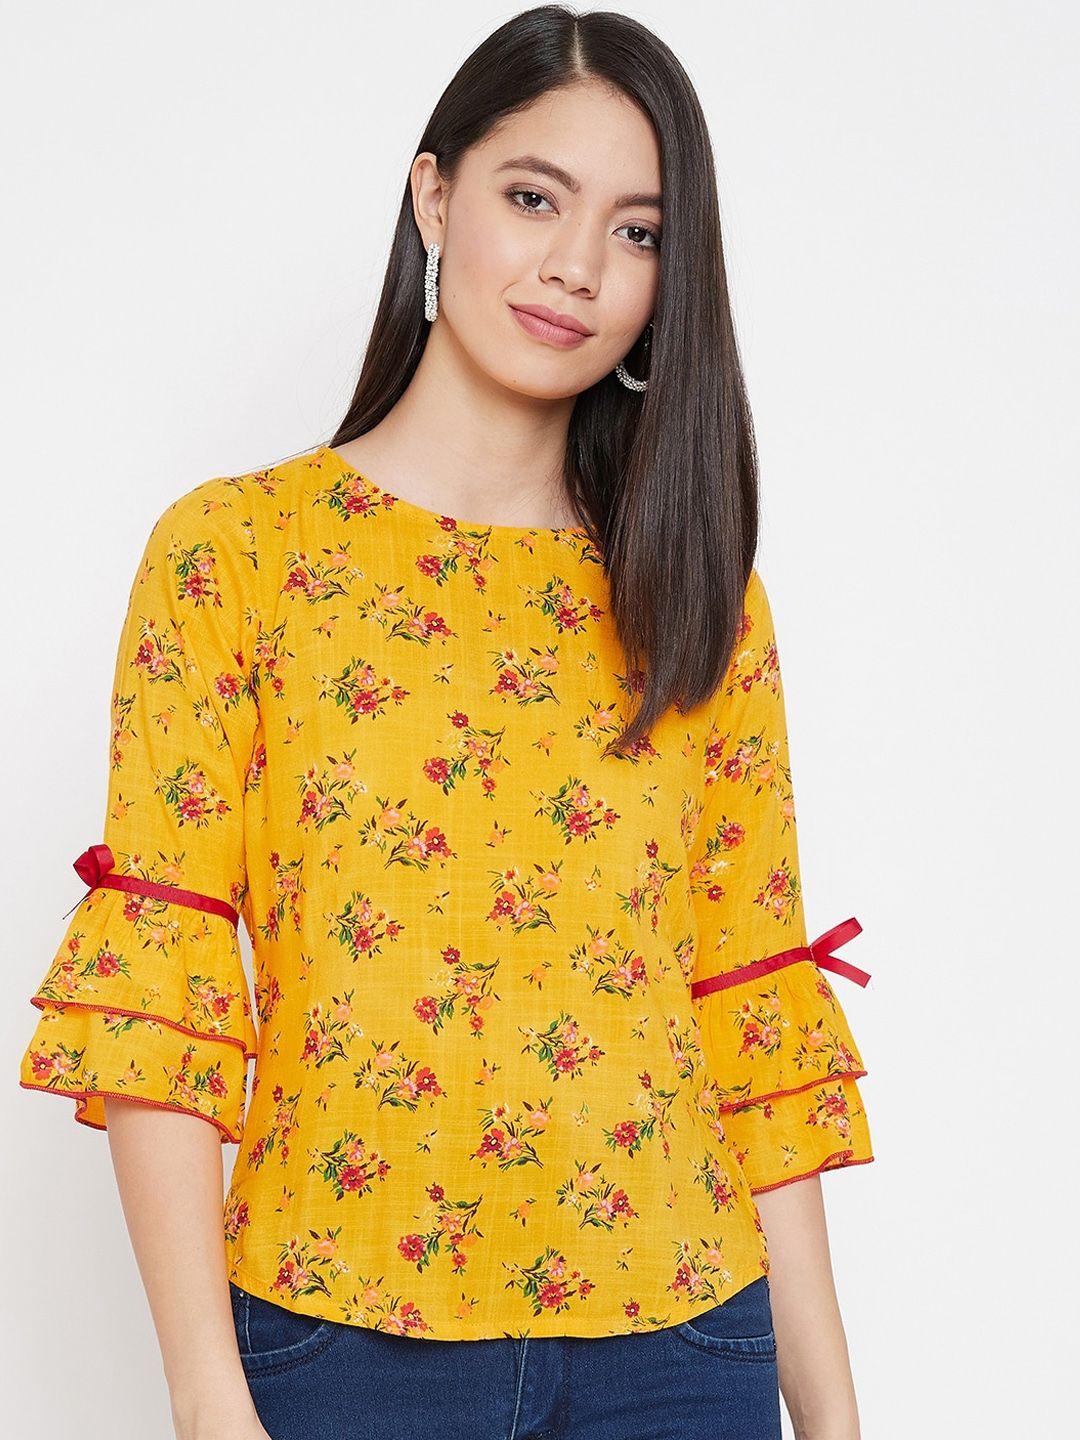 winered-women-yellow-printed-top